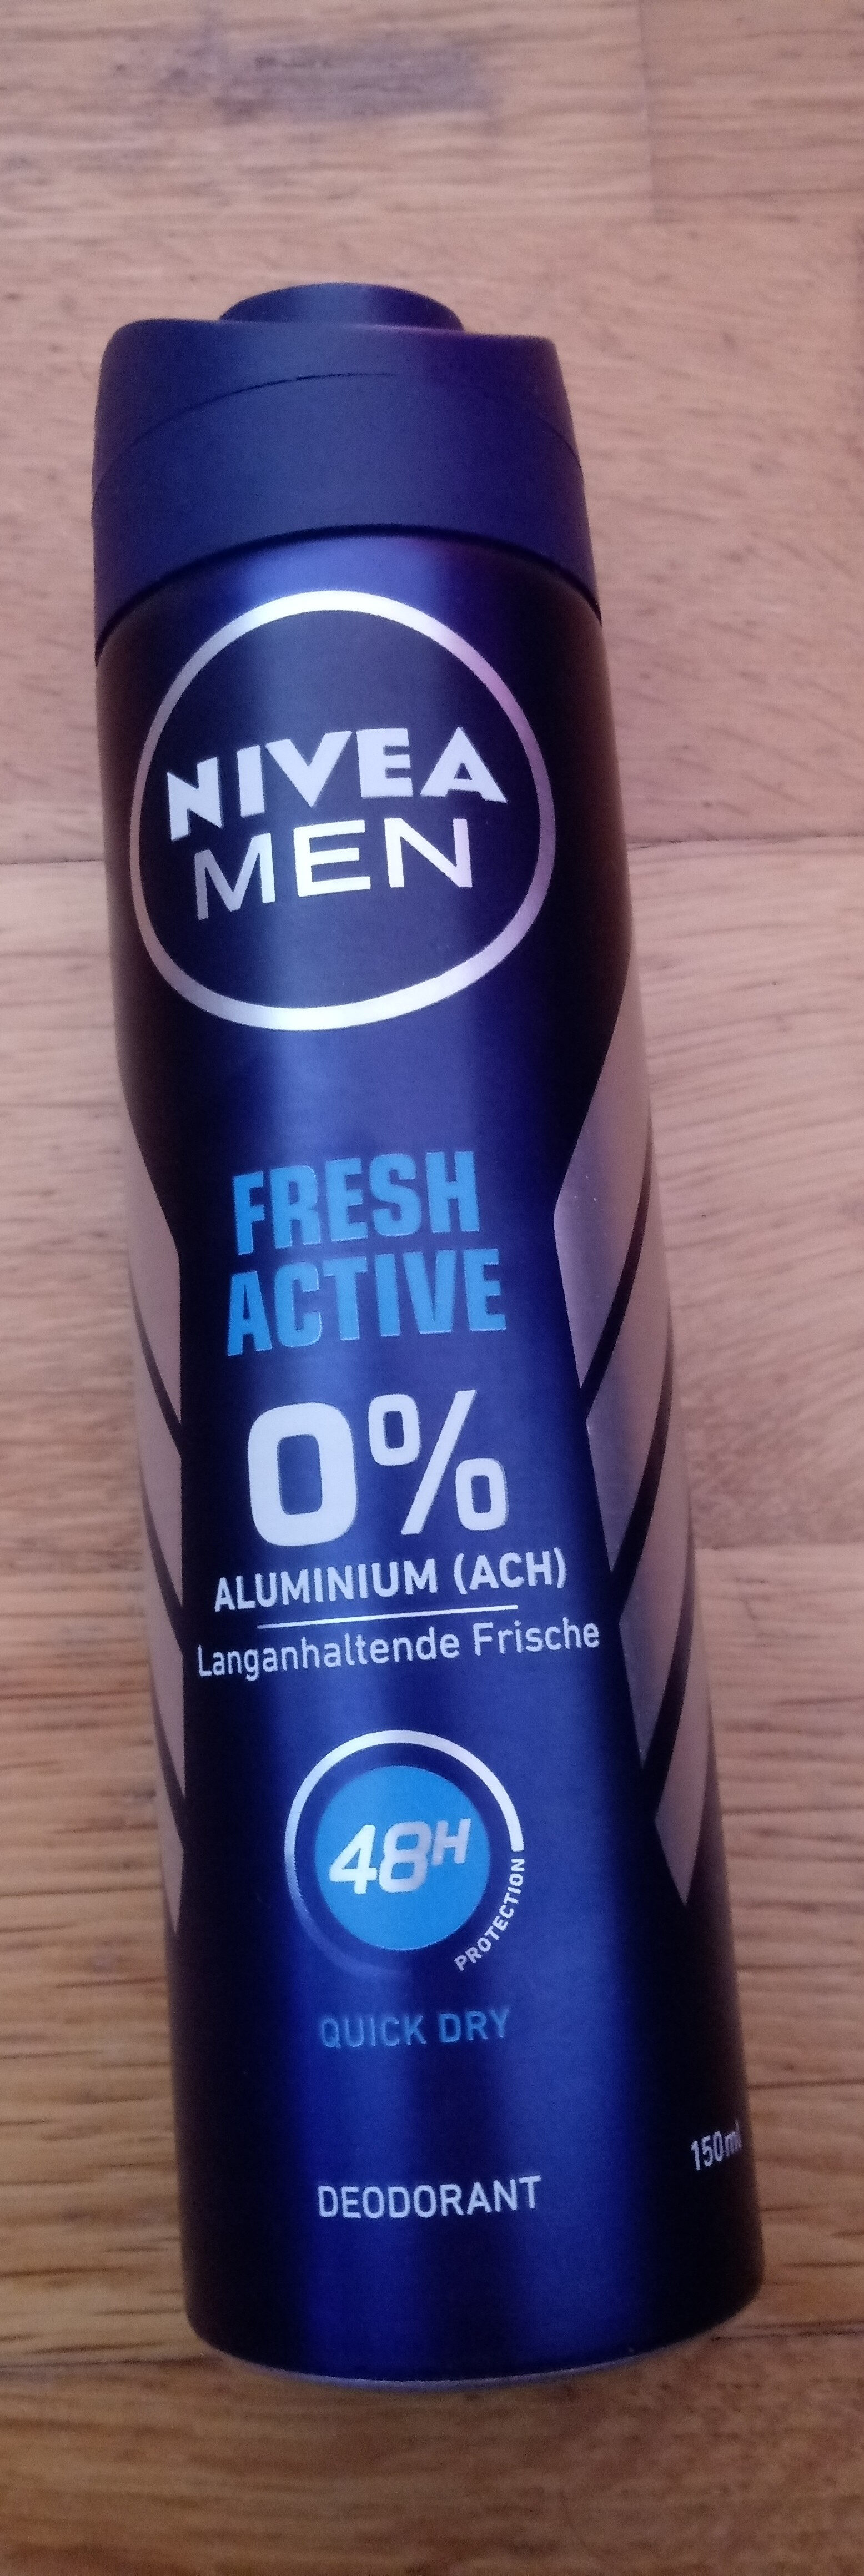 Fresh Active Deodorant - Produit - de